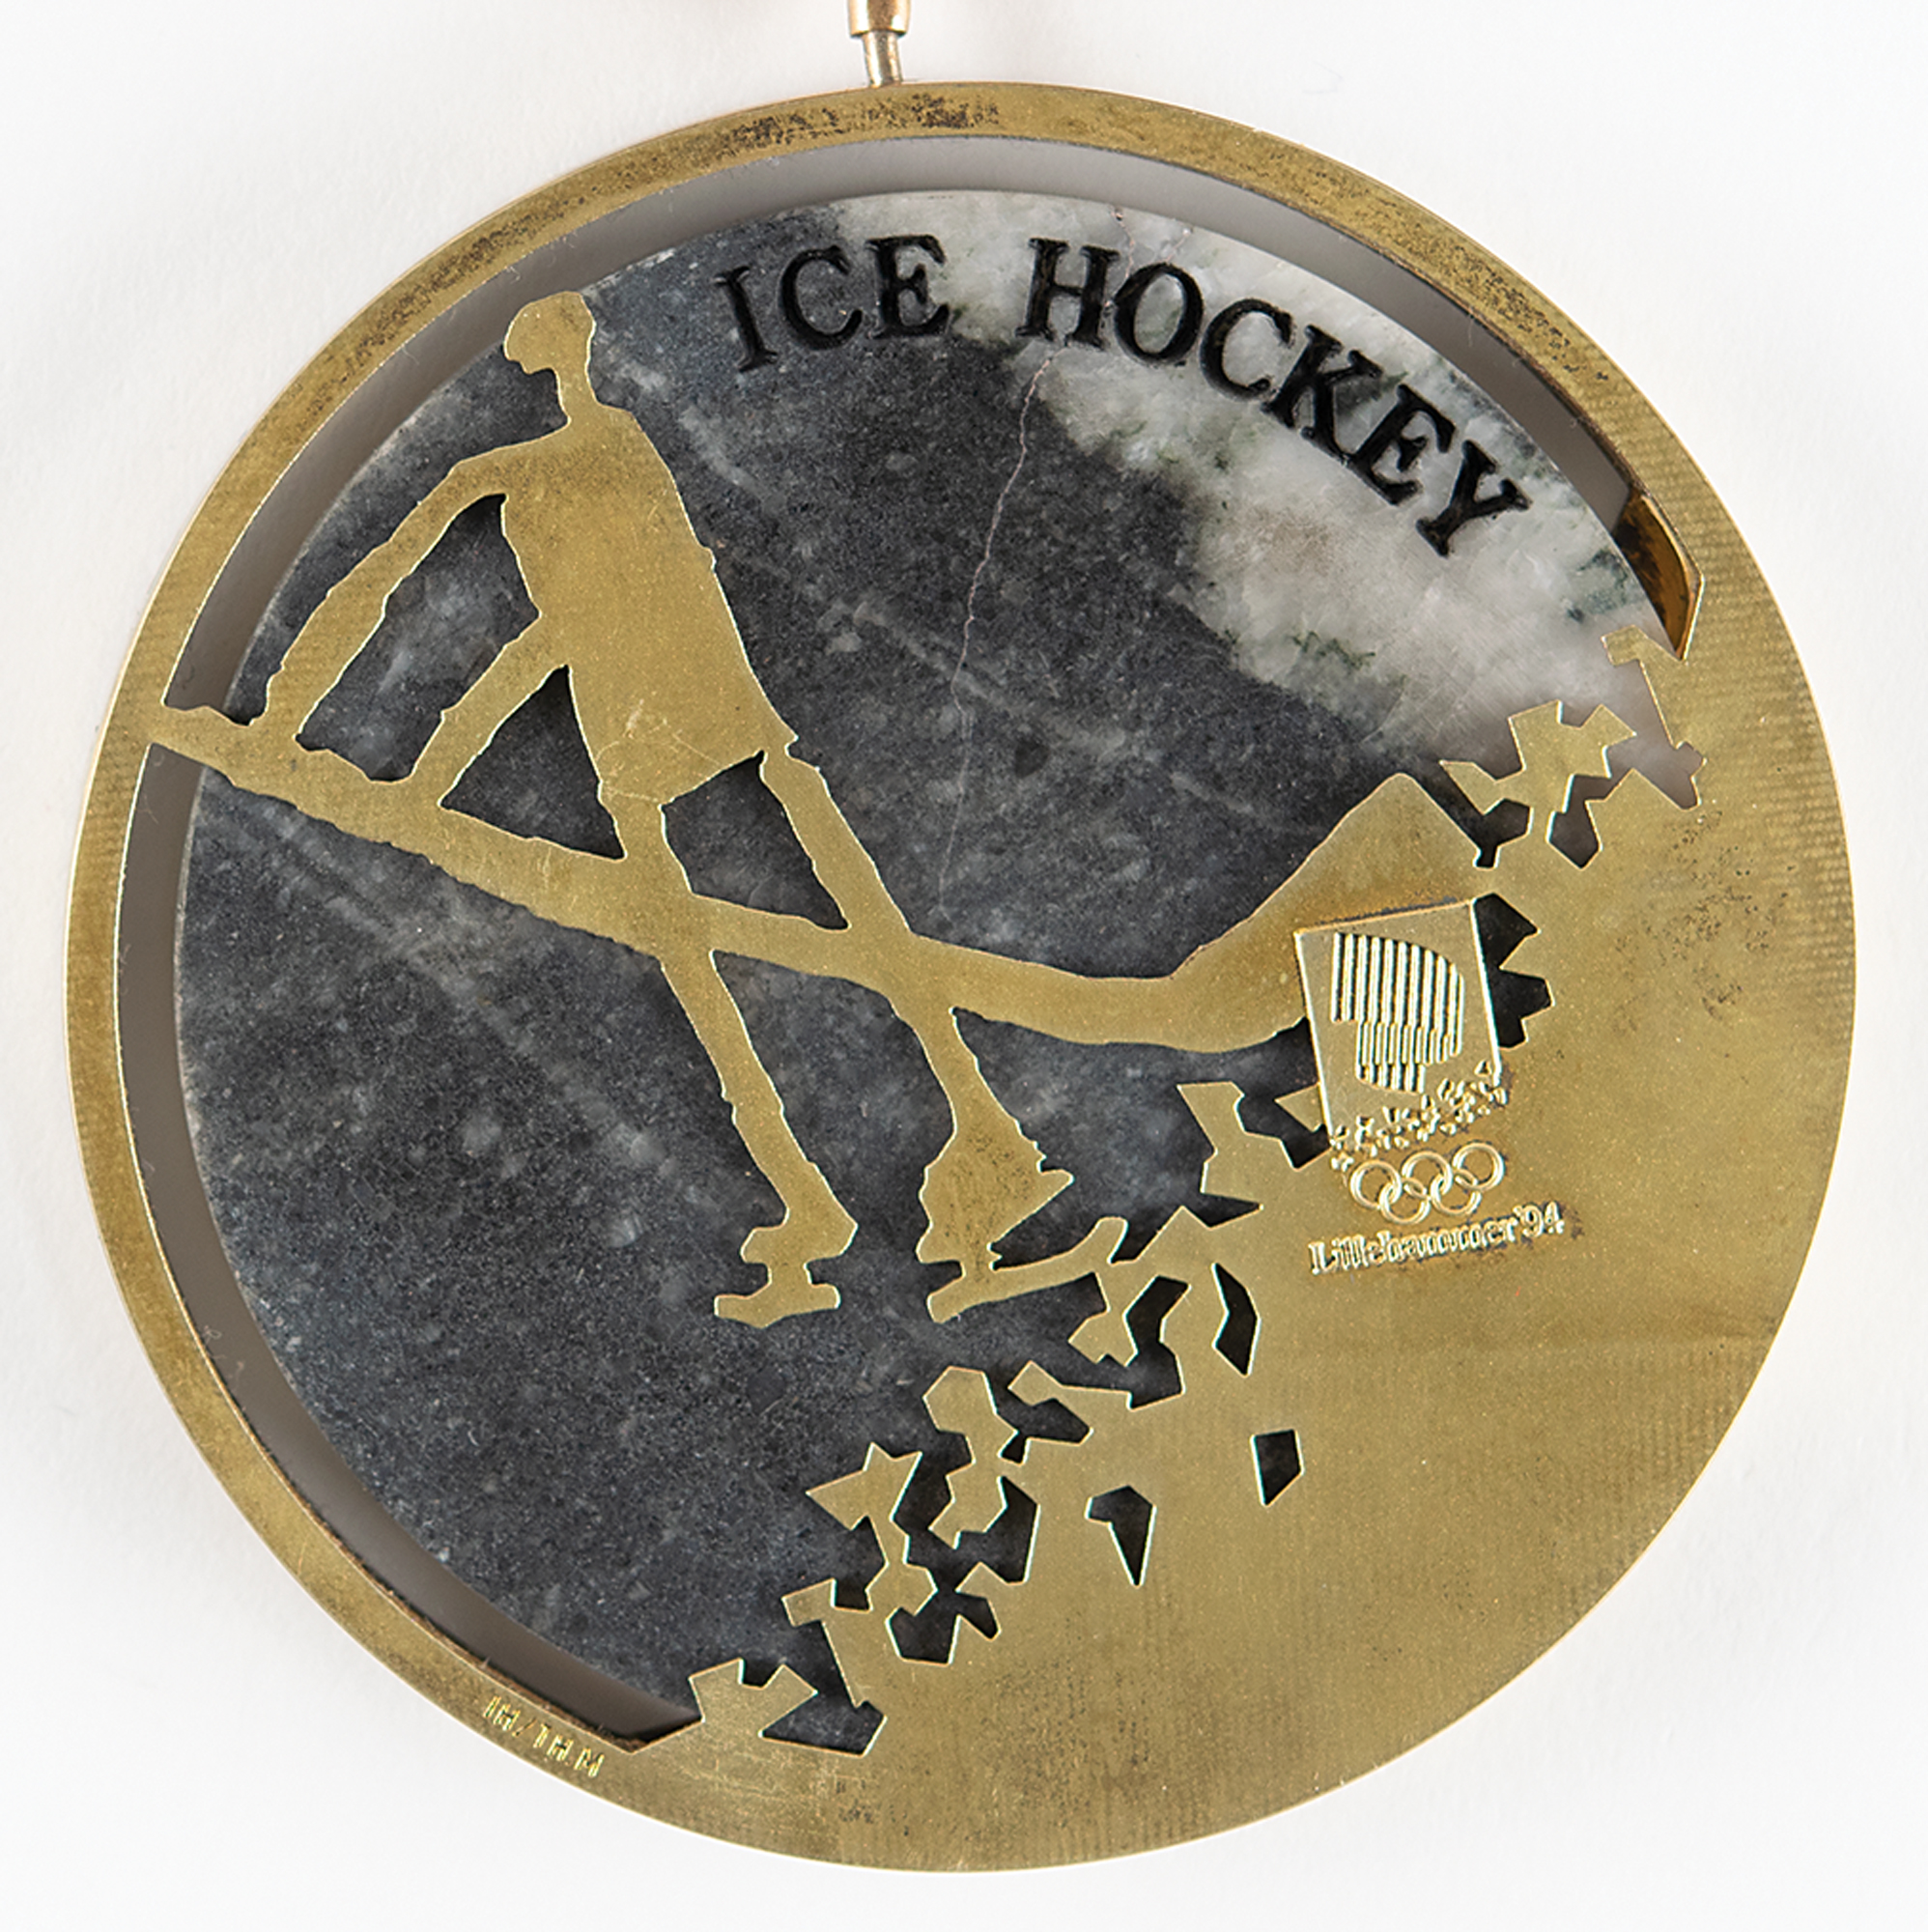 Lillehammer 1994 Winter Olympics Gold Winner's Medal | RR Auction